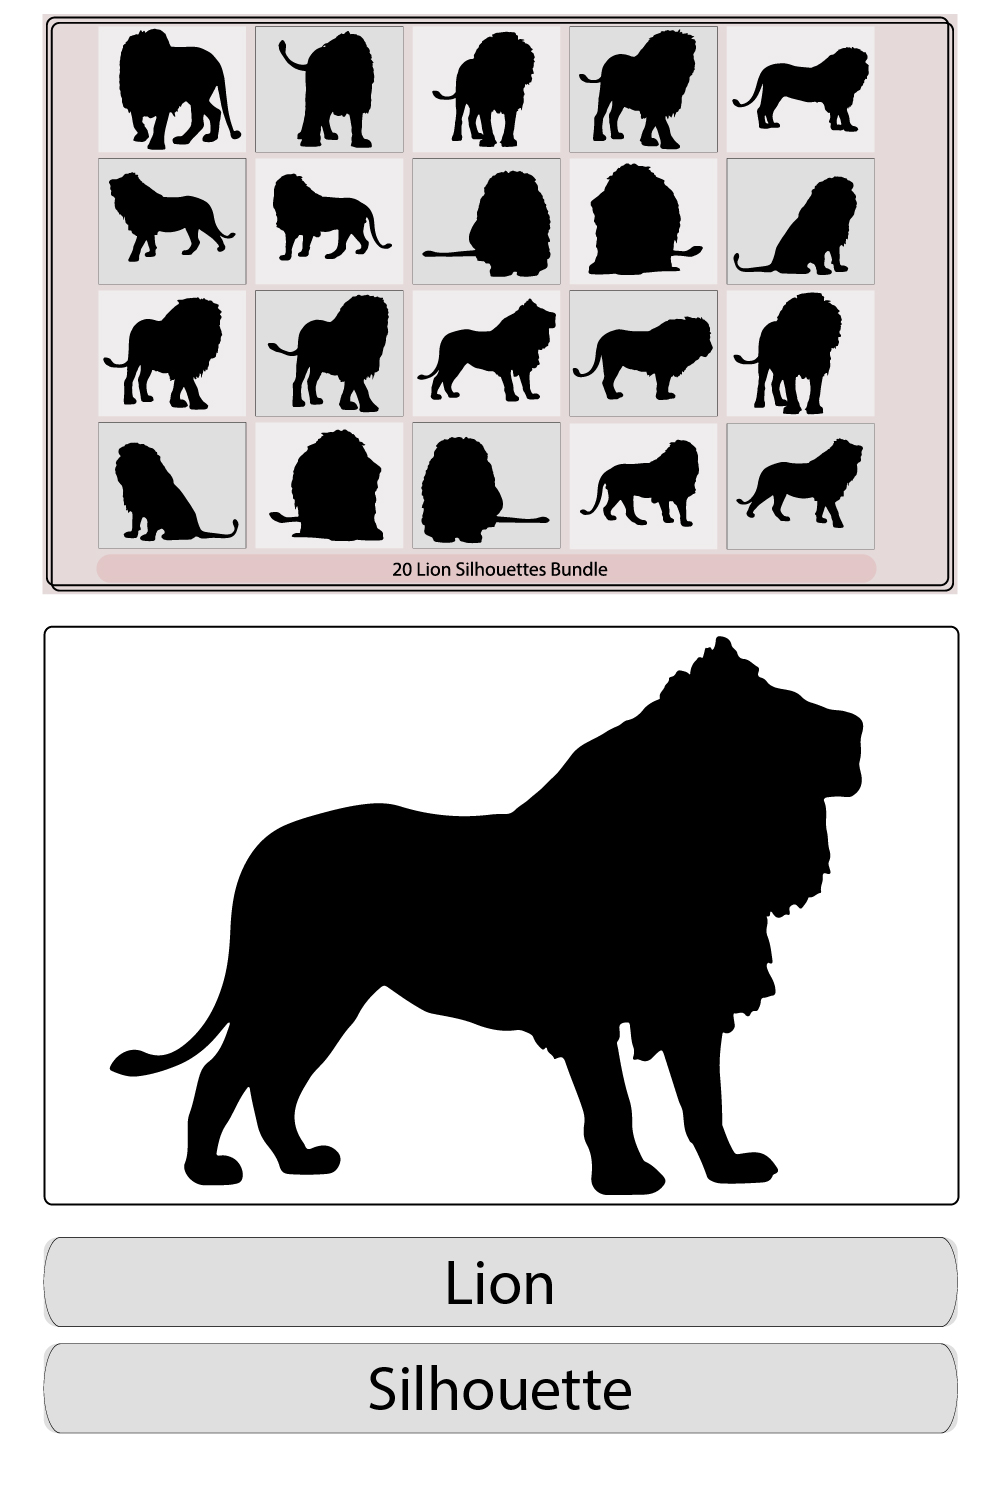 Lion silhouette,Lions set vector,African lion silhouettes set,Lion and lion cub predator black silhouette animal pinterest preview image.